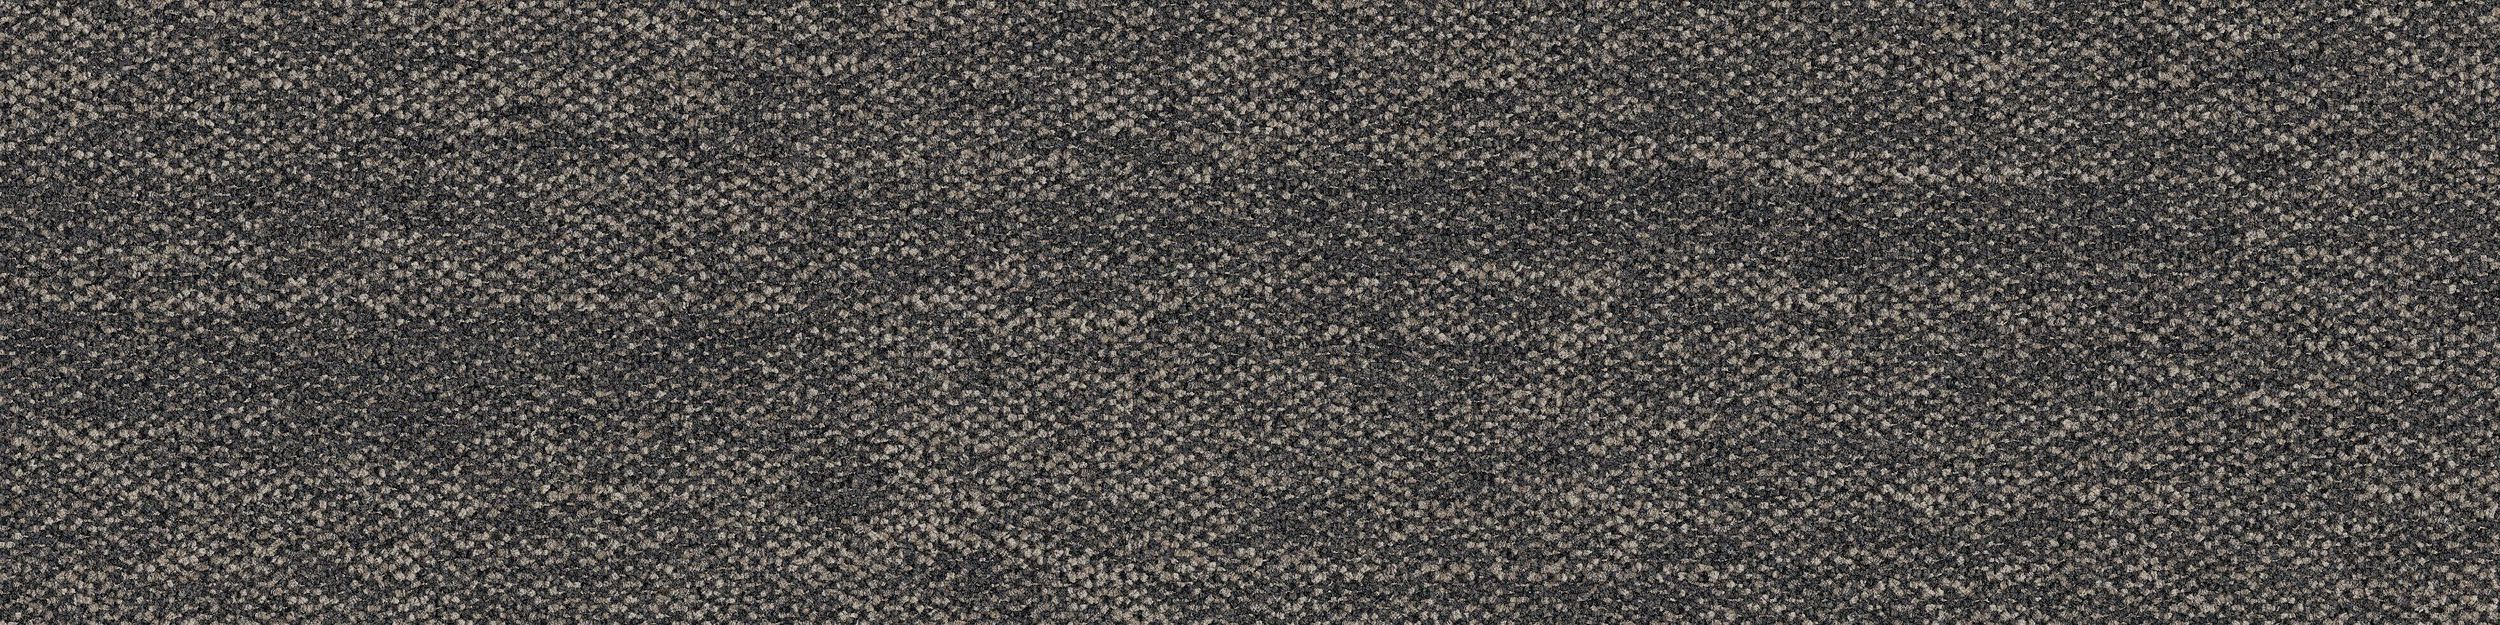 image Open Air 402 Carpet Tile In Granite numéro 2